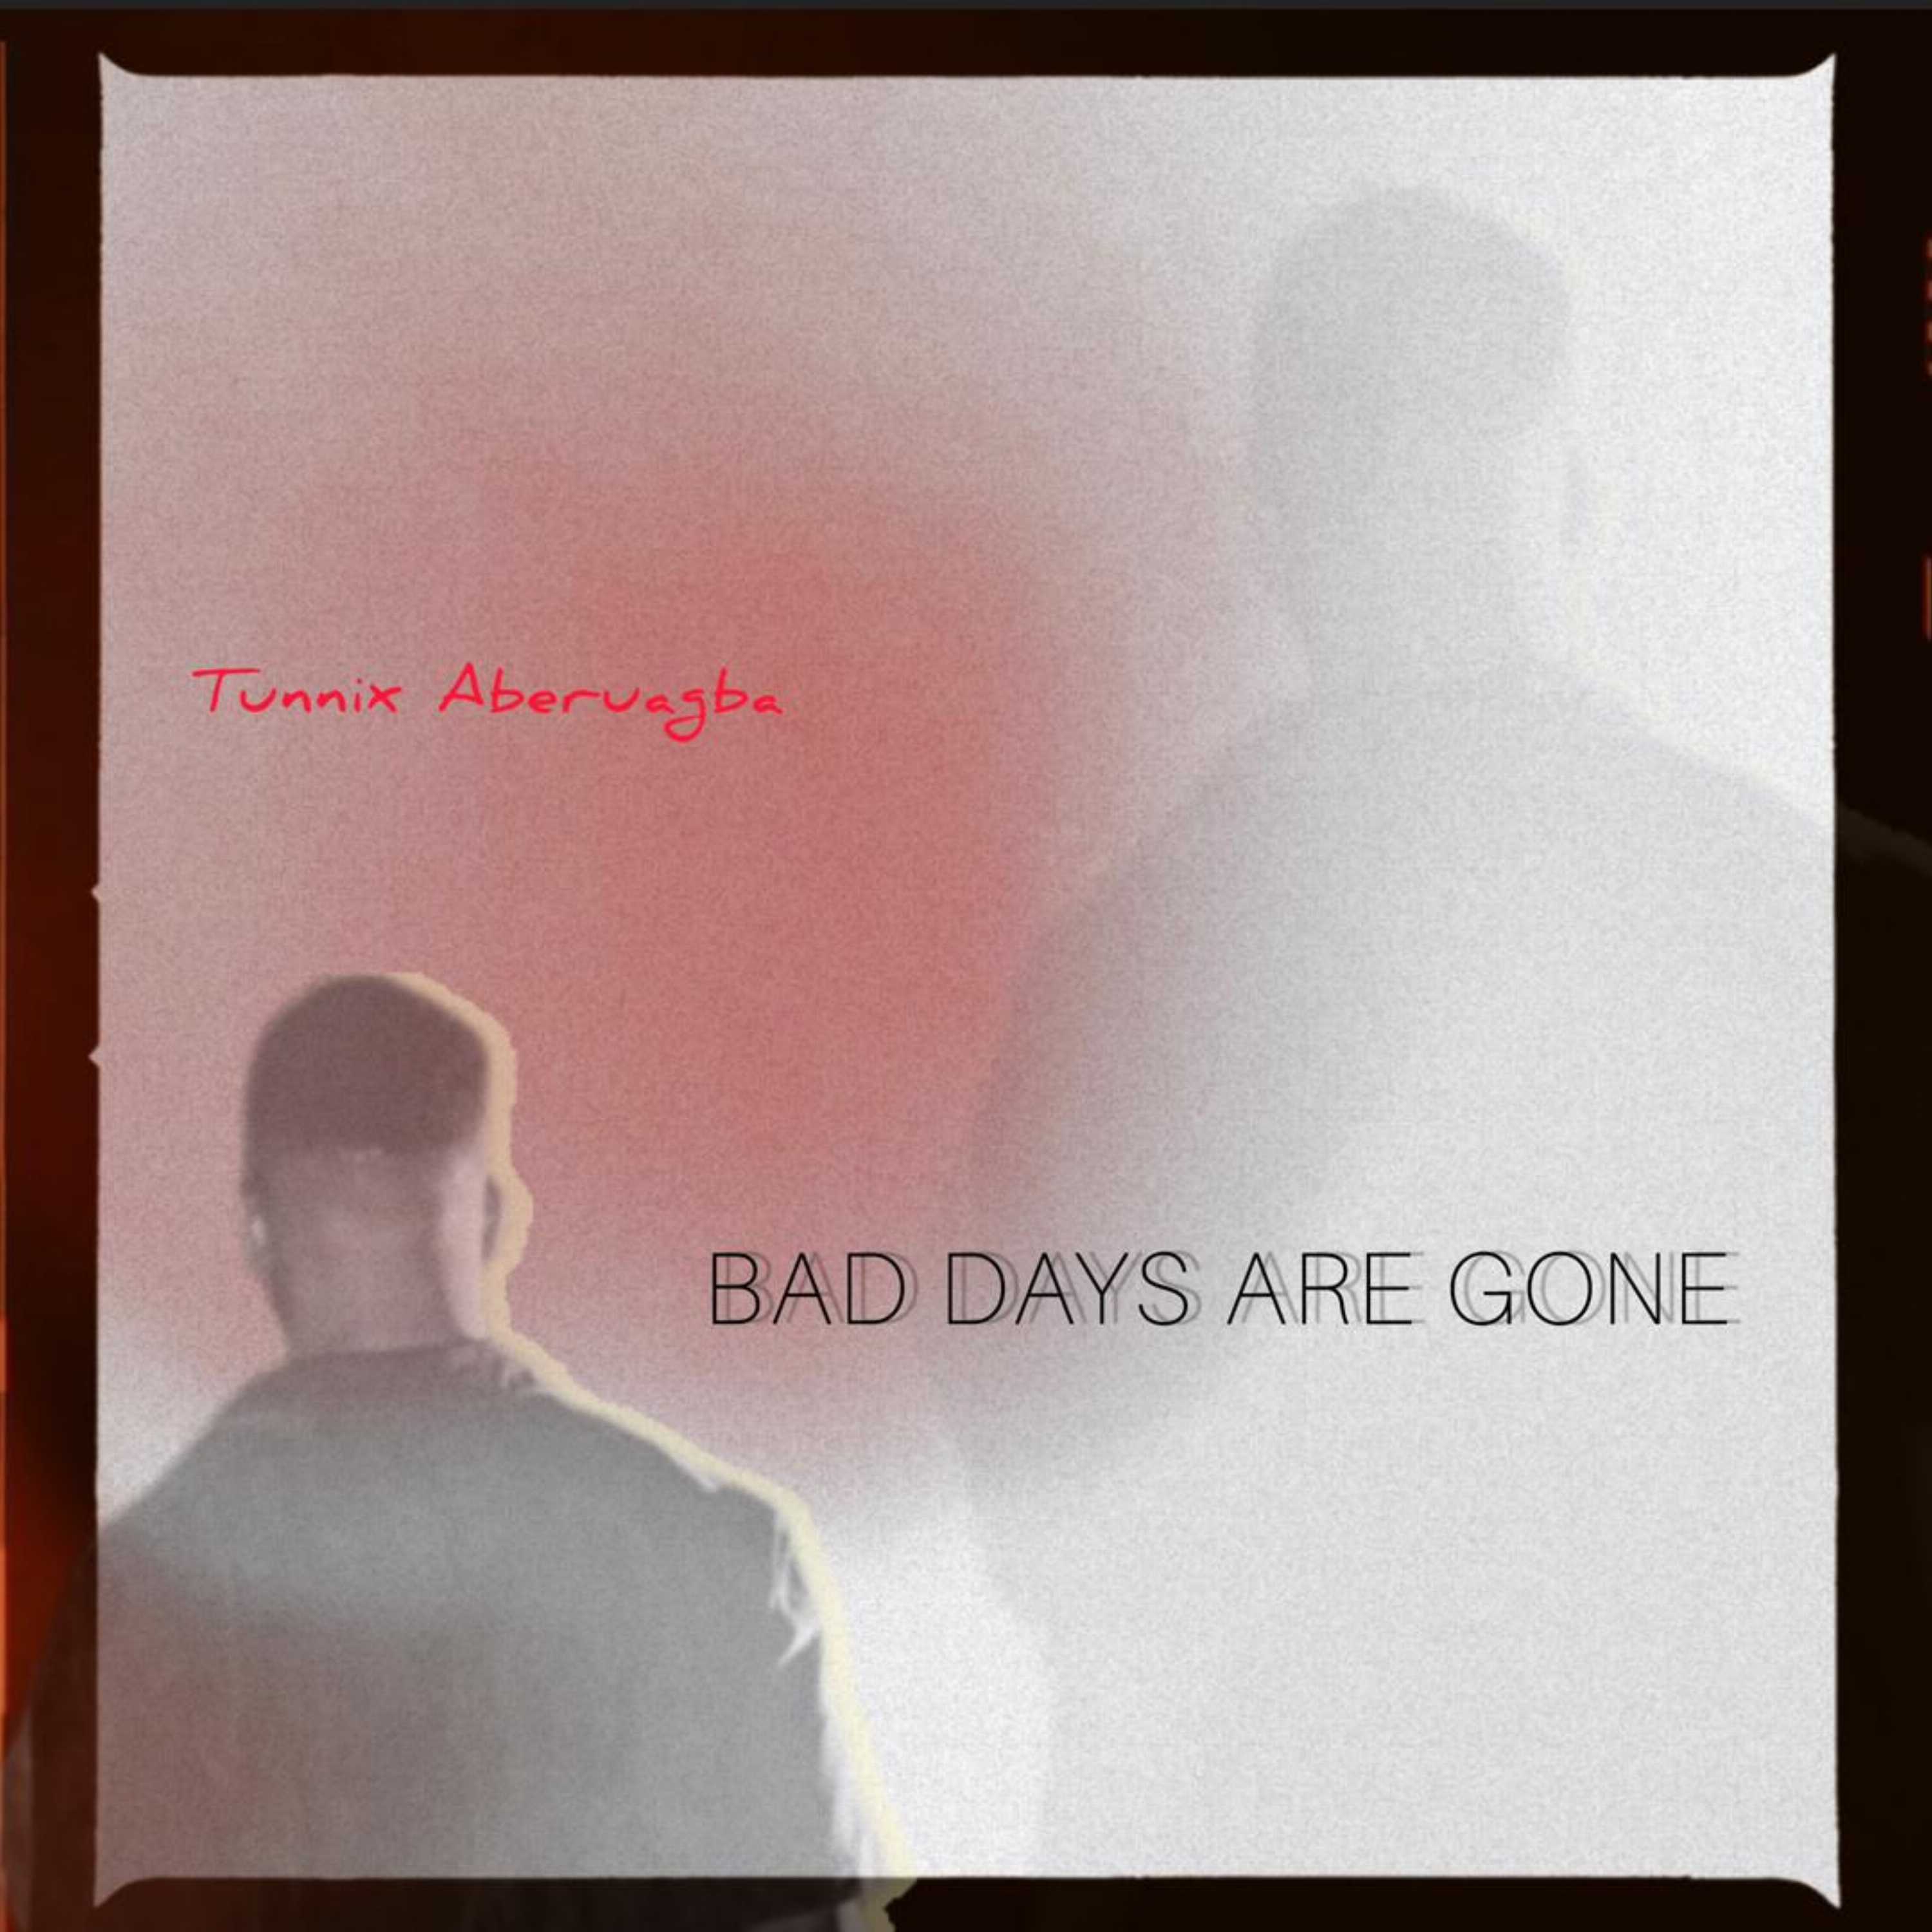 Tunnix Aberuagba - Bad Days Are Gone